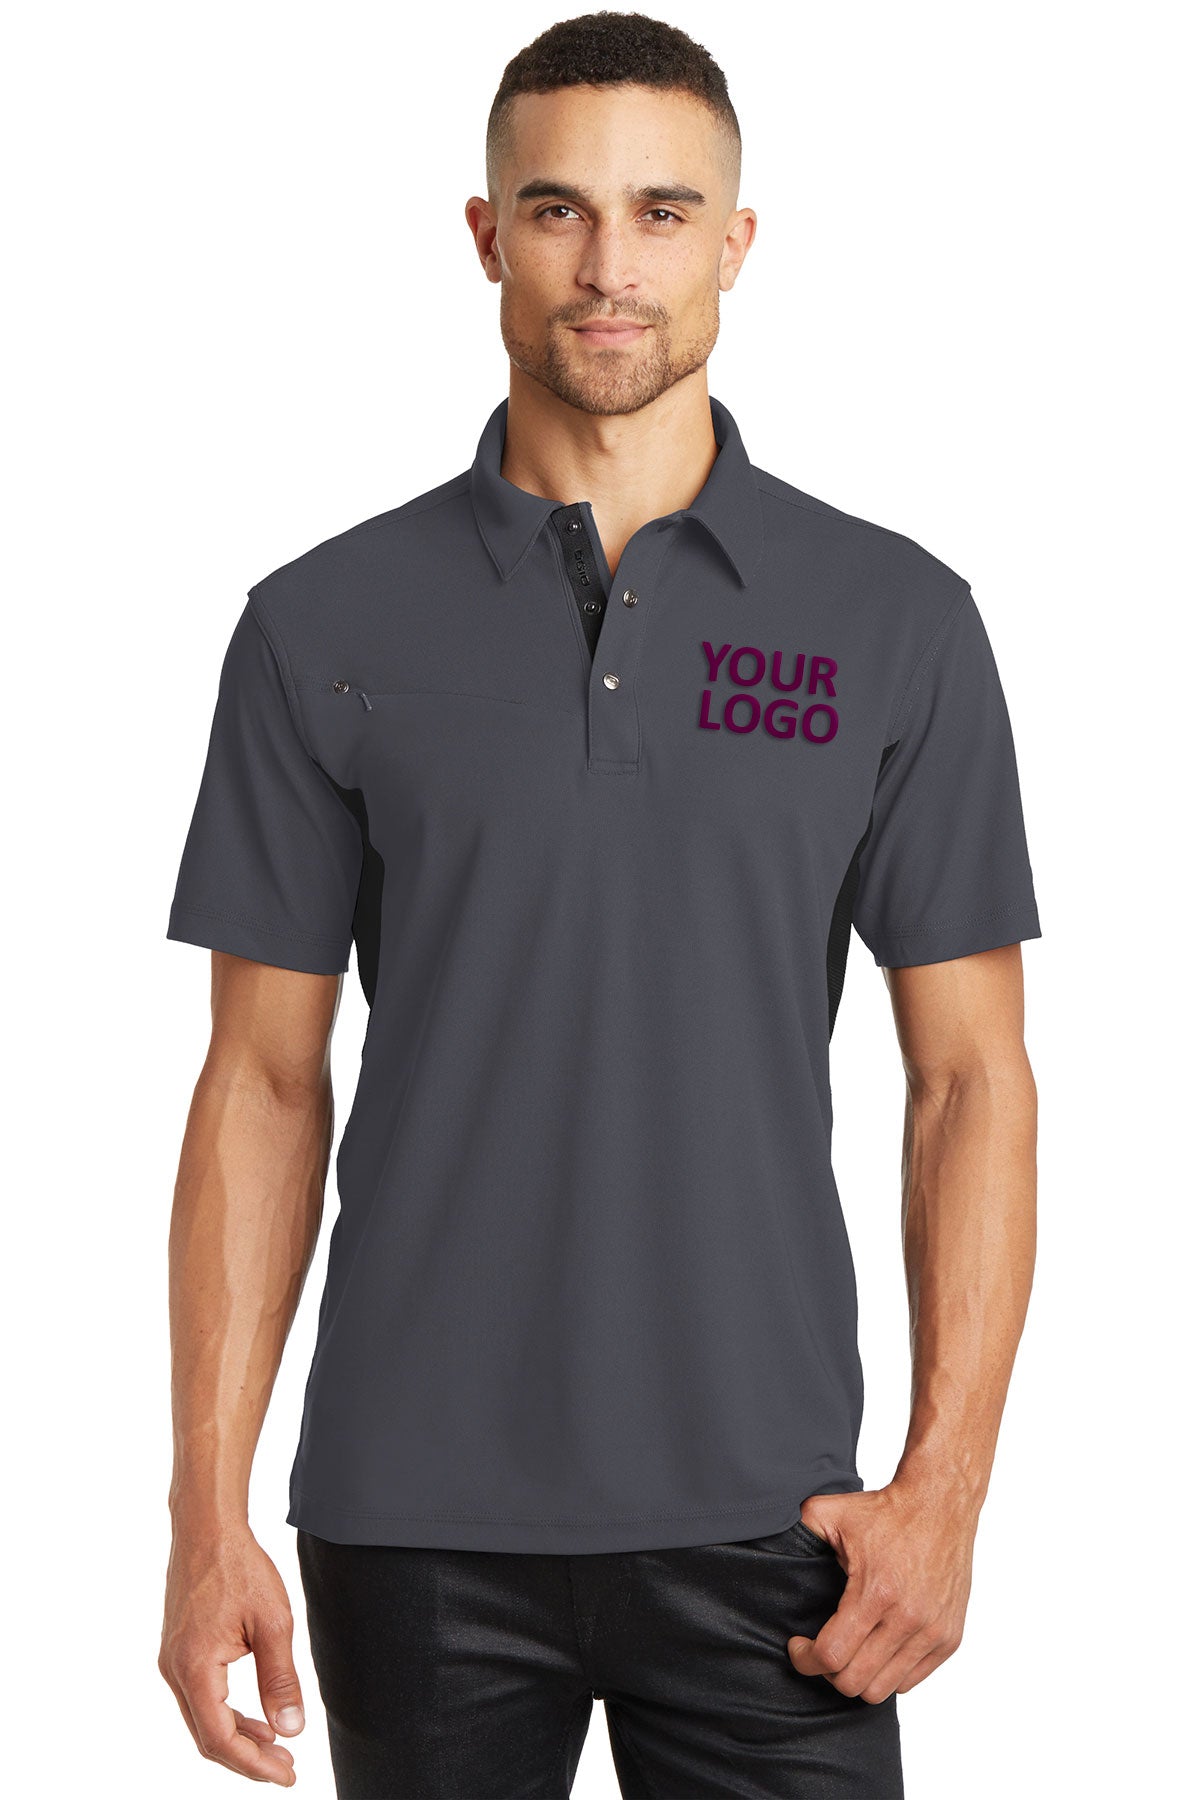 OGIO Diesel Grey/Blacktop OG102 polo shirts with custom logo